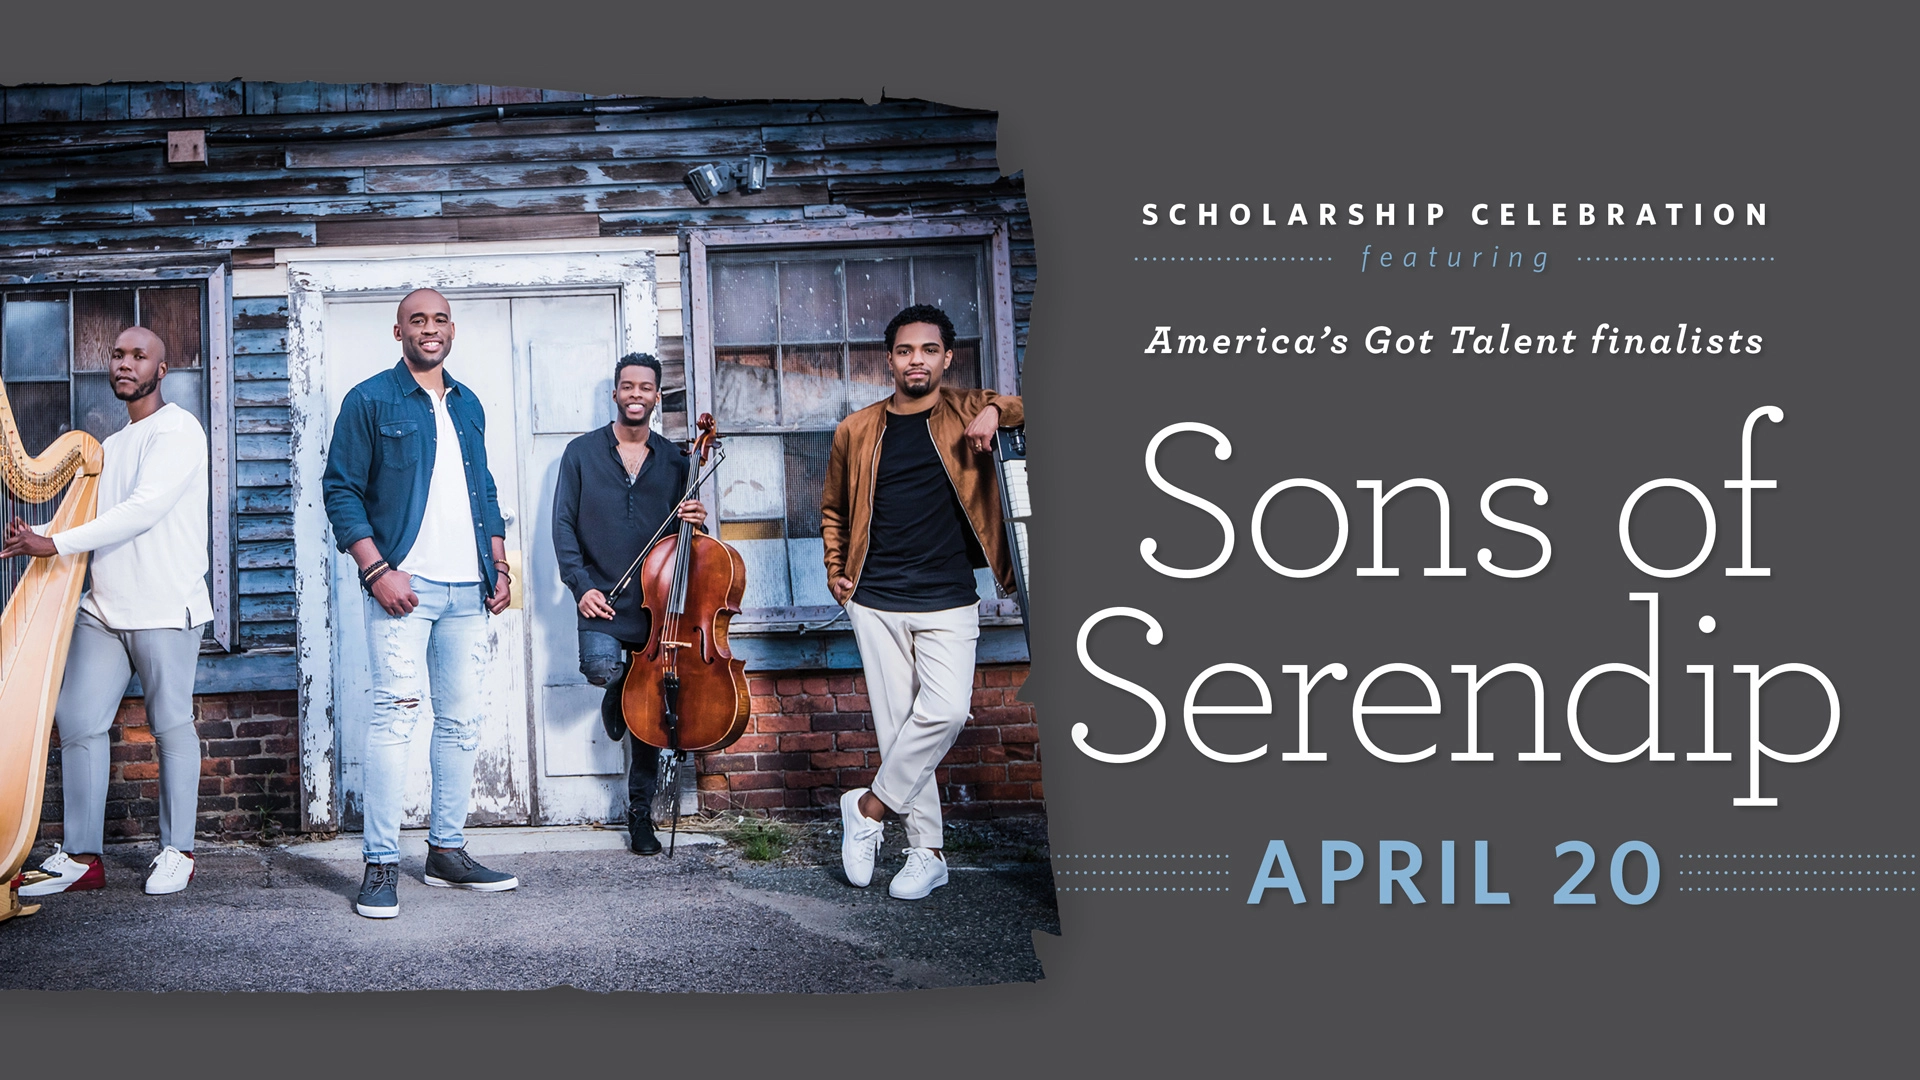 Scholarship Celebration Sons of Serendip